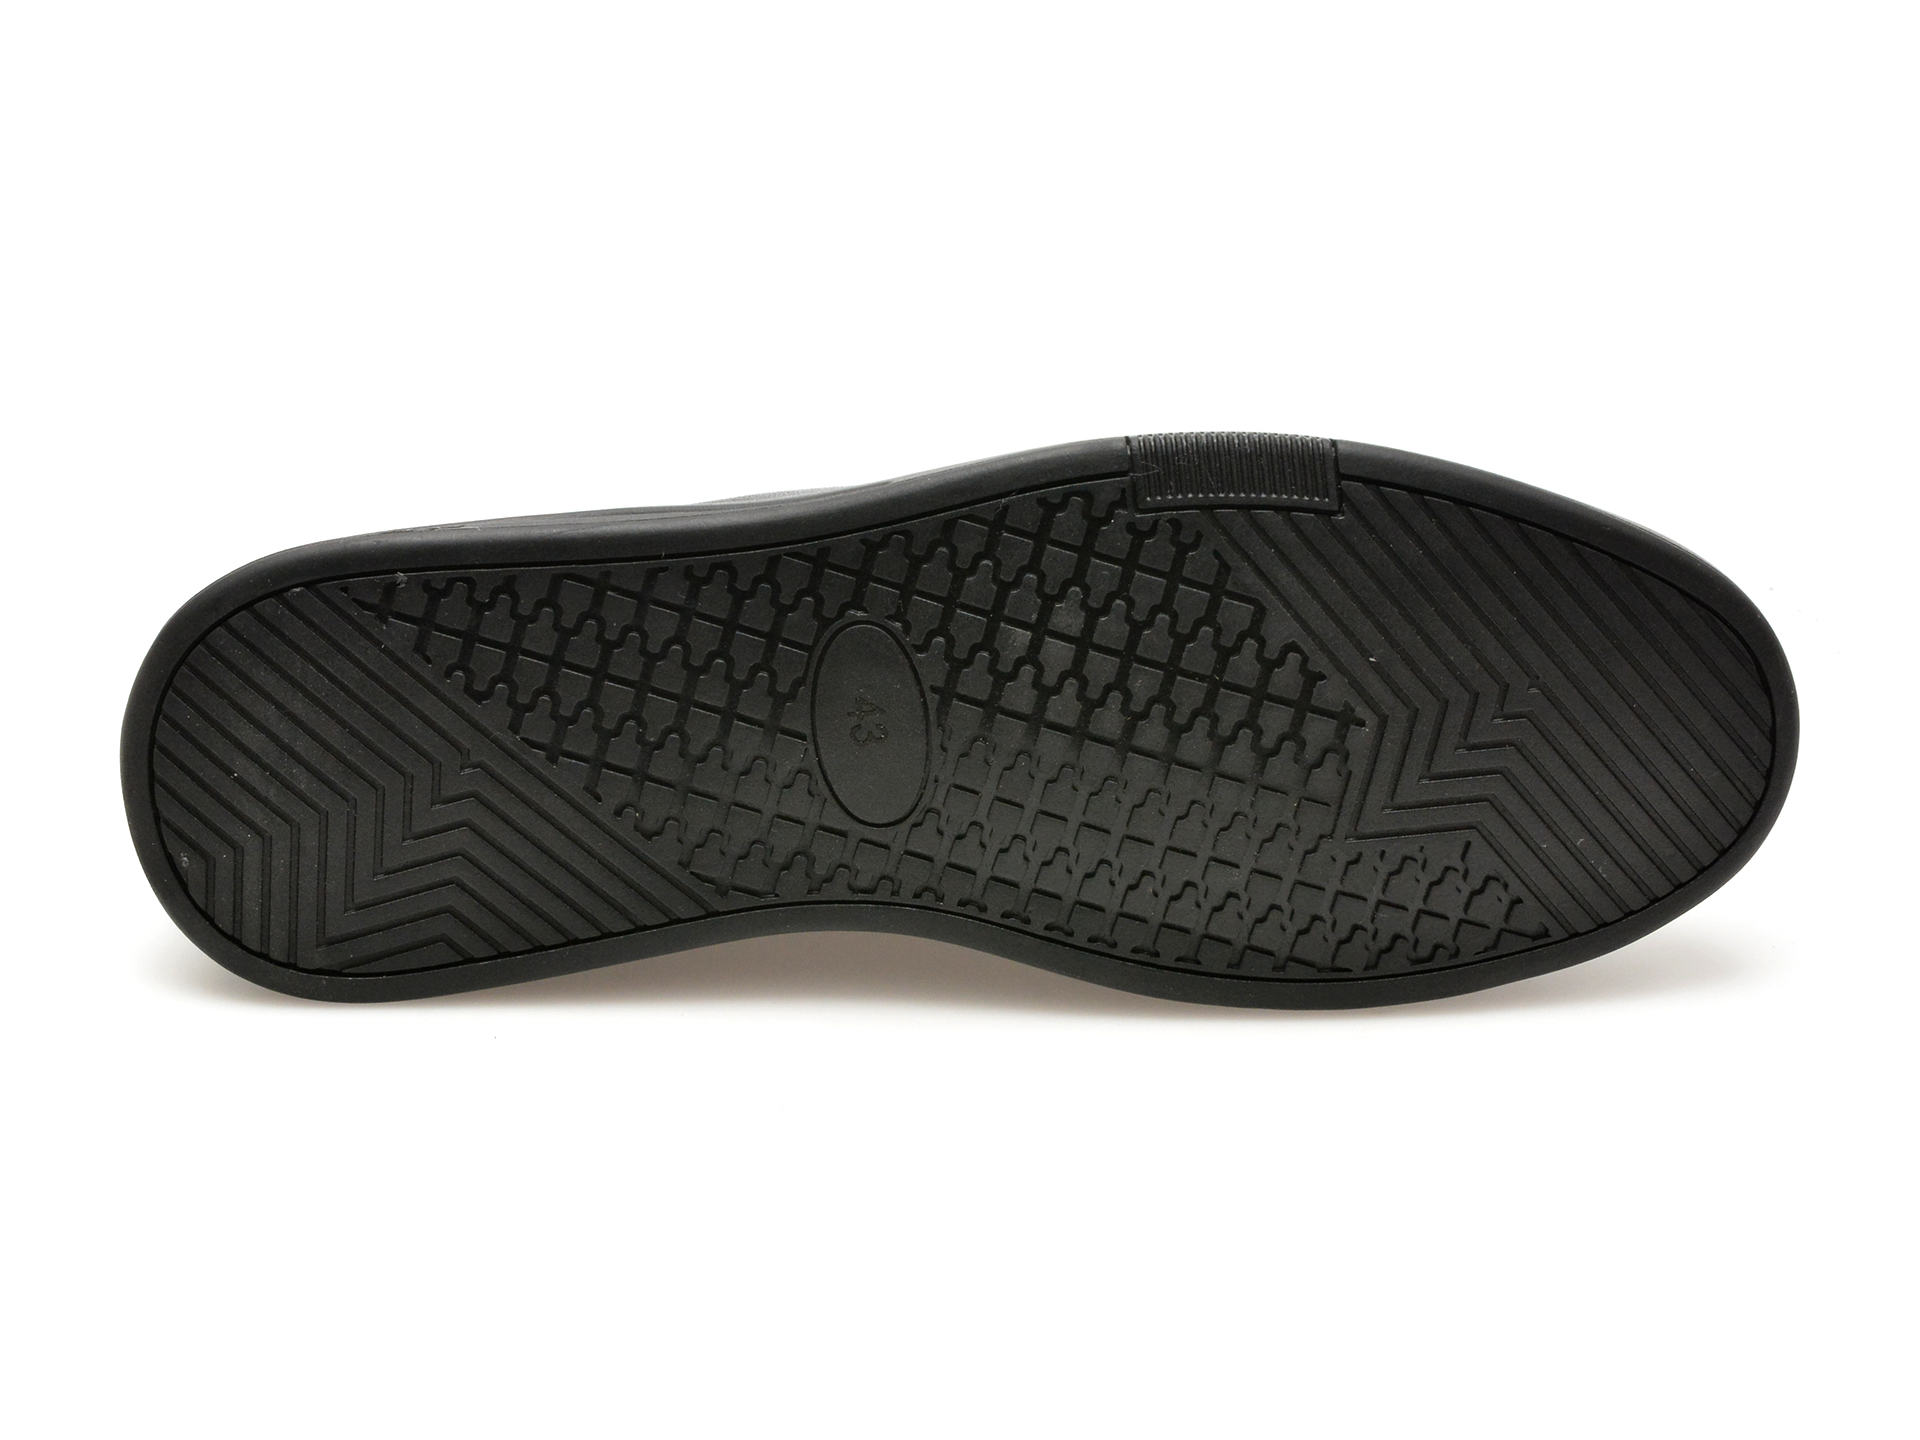 Pantofi Casual OTTER negri, NR04, din piele naturala